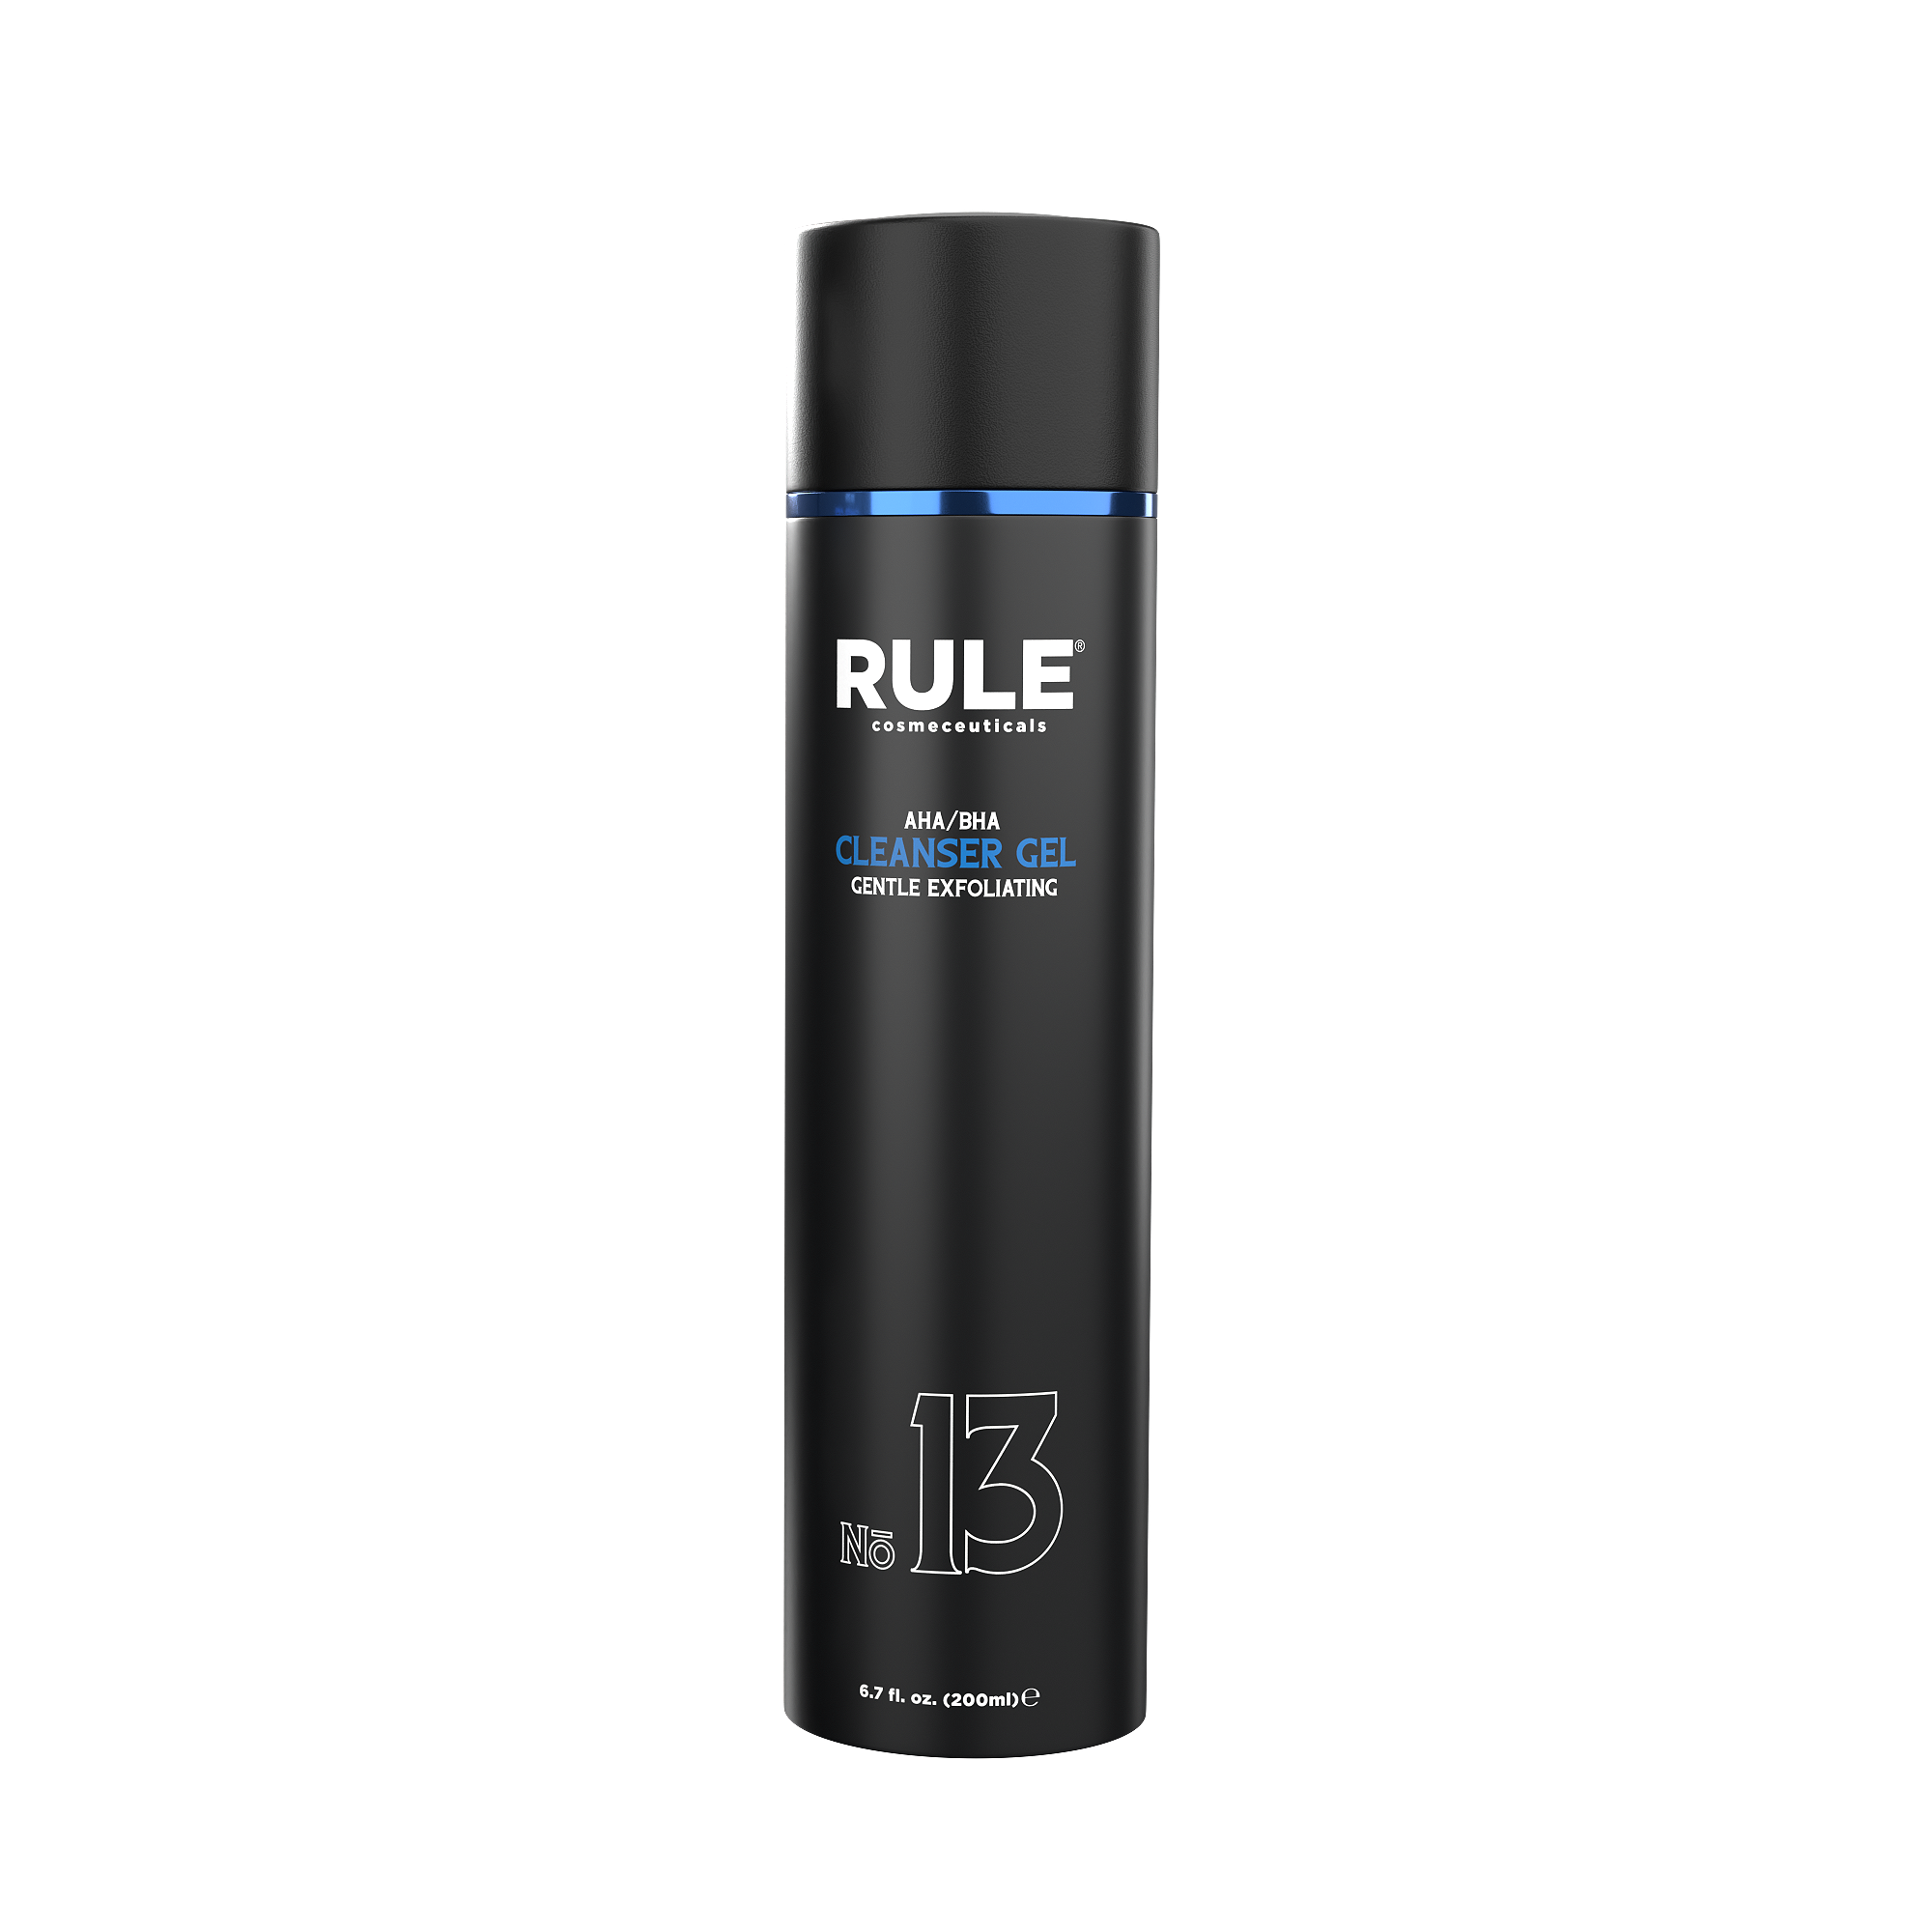 Rule Cosmeceuticals Rule 13: AHA/BHA Cleanser Gel Gentle Exfoliating / 6.7OZ